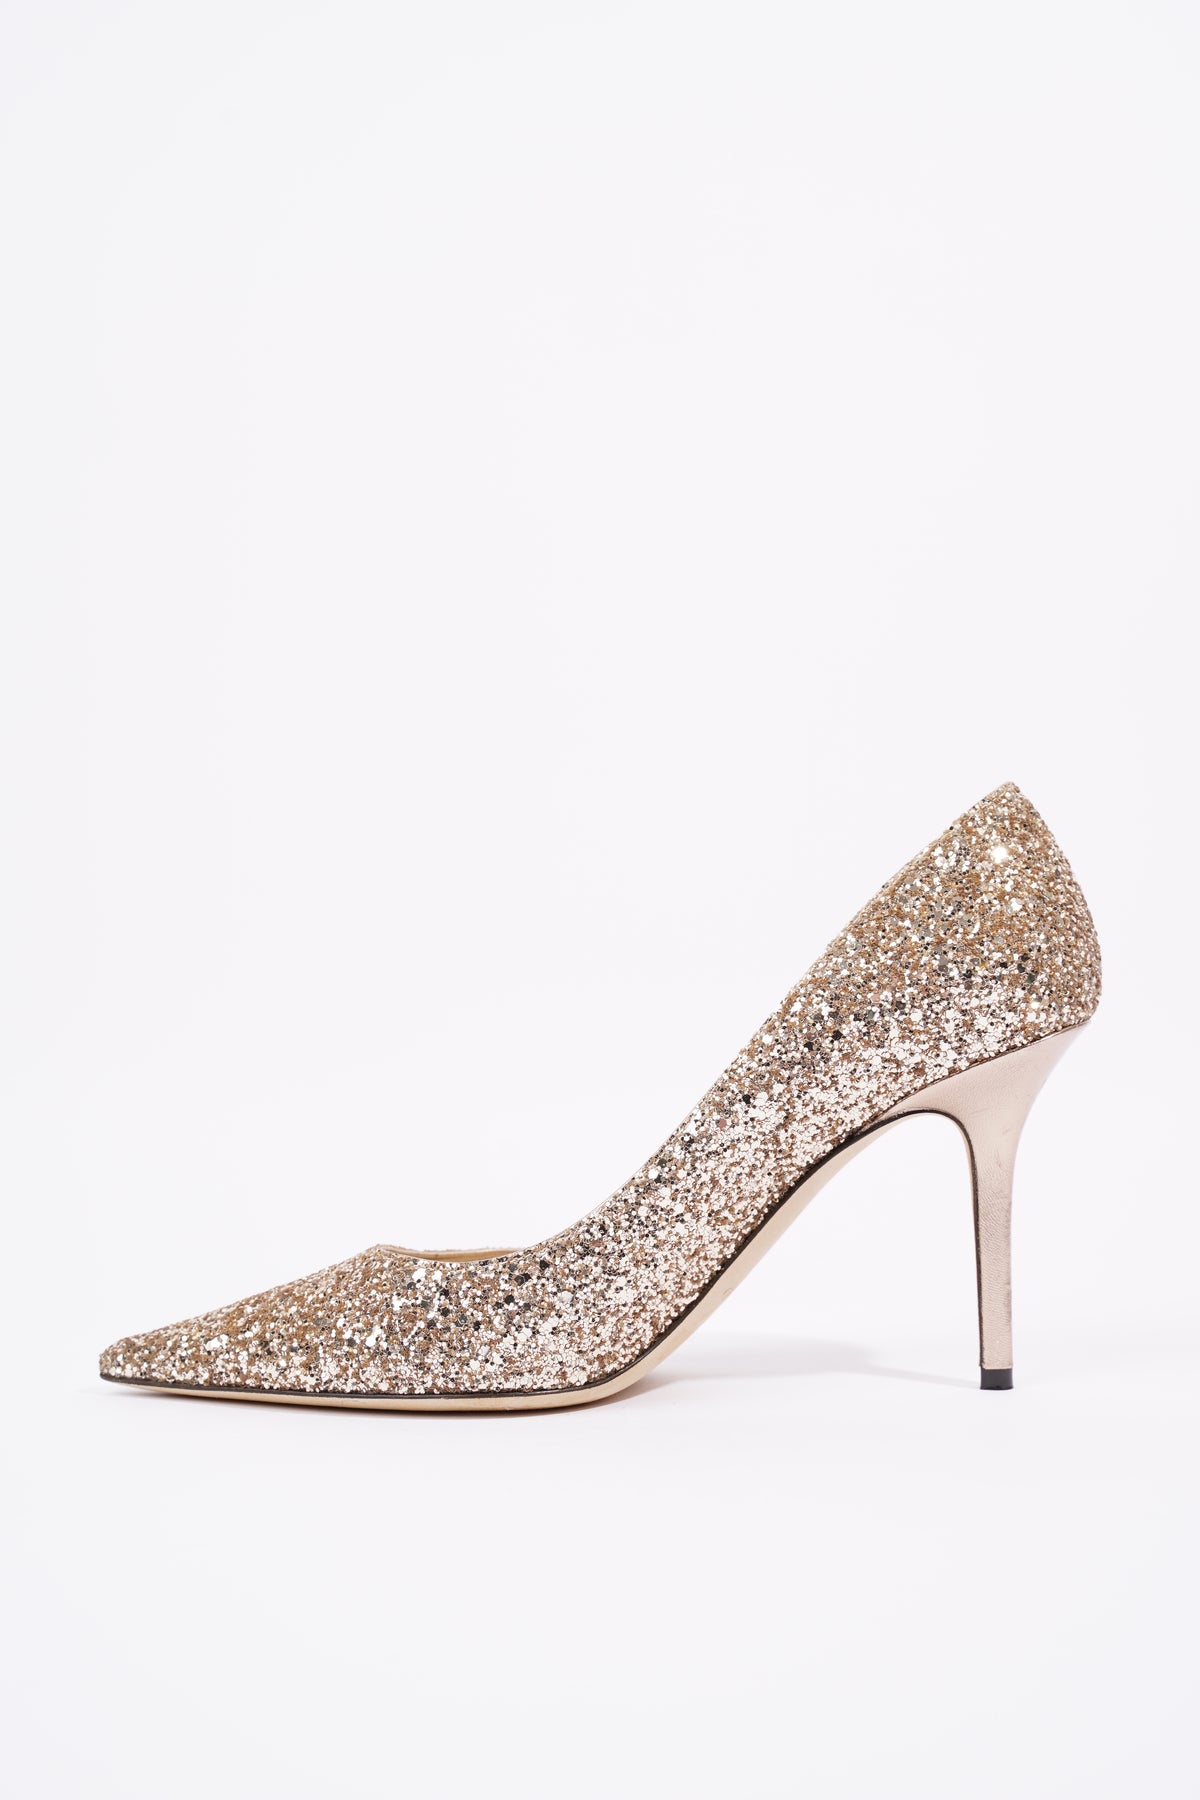 Pair of gold glitter pumps, 110 mm metallic heels adorne… | Drouot.com